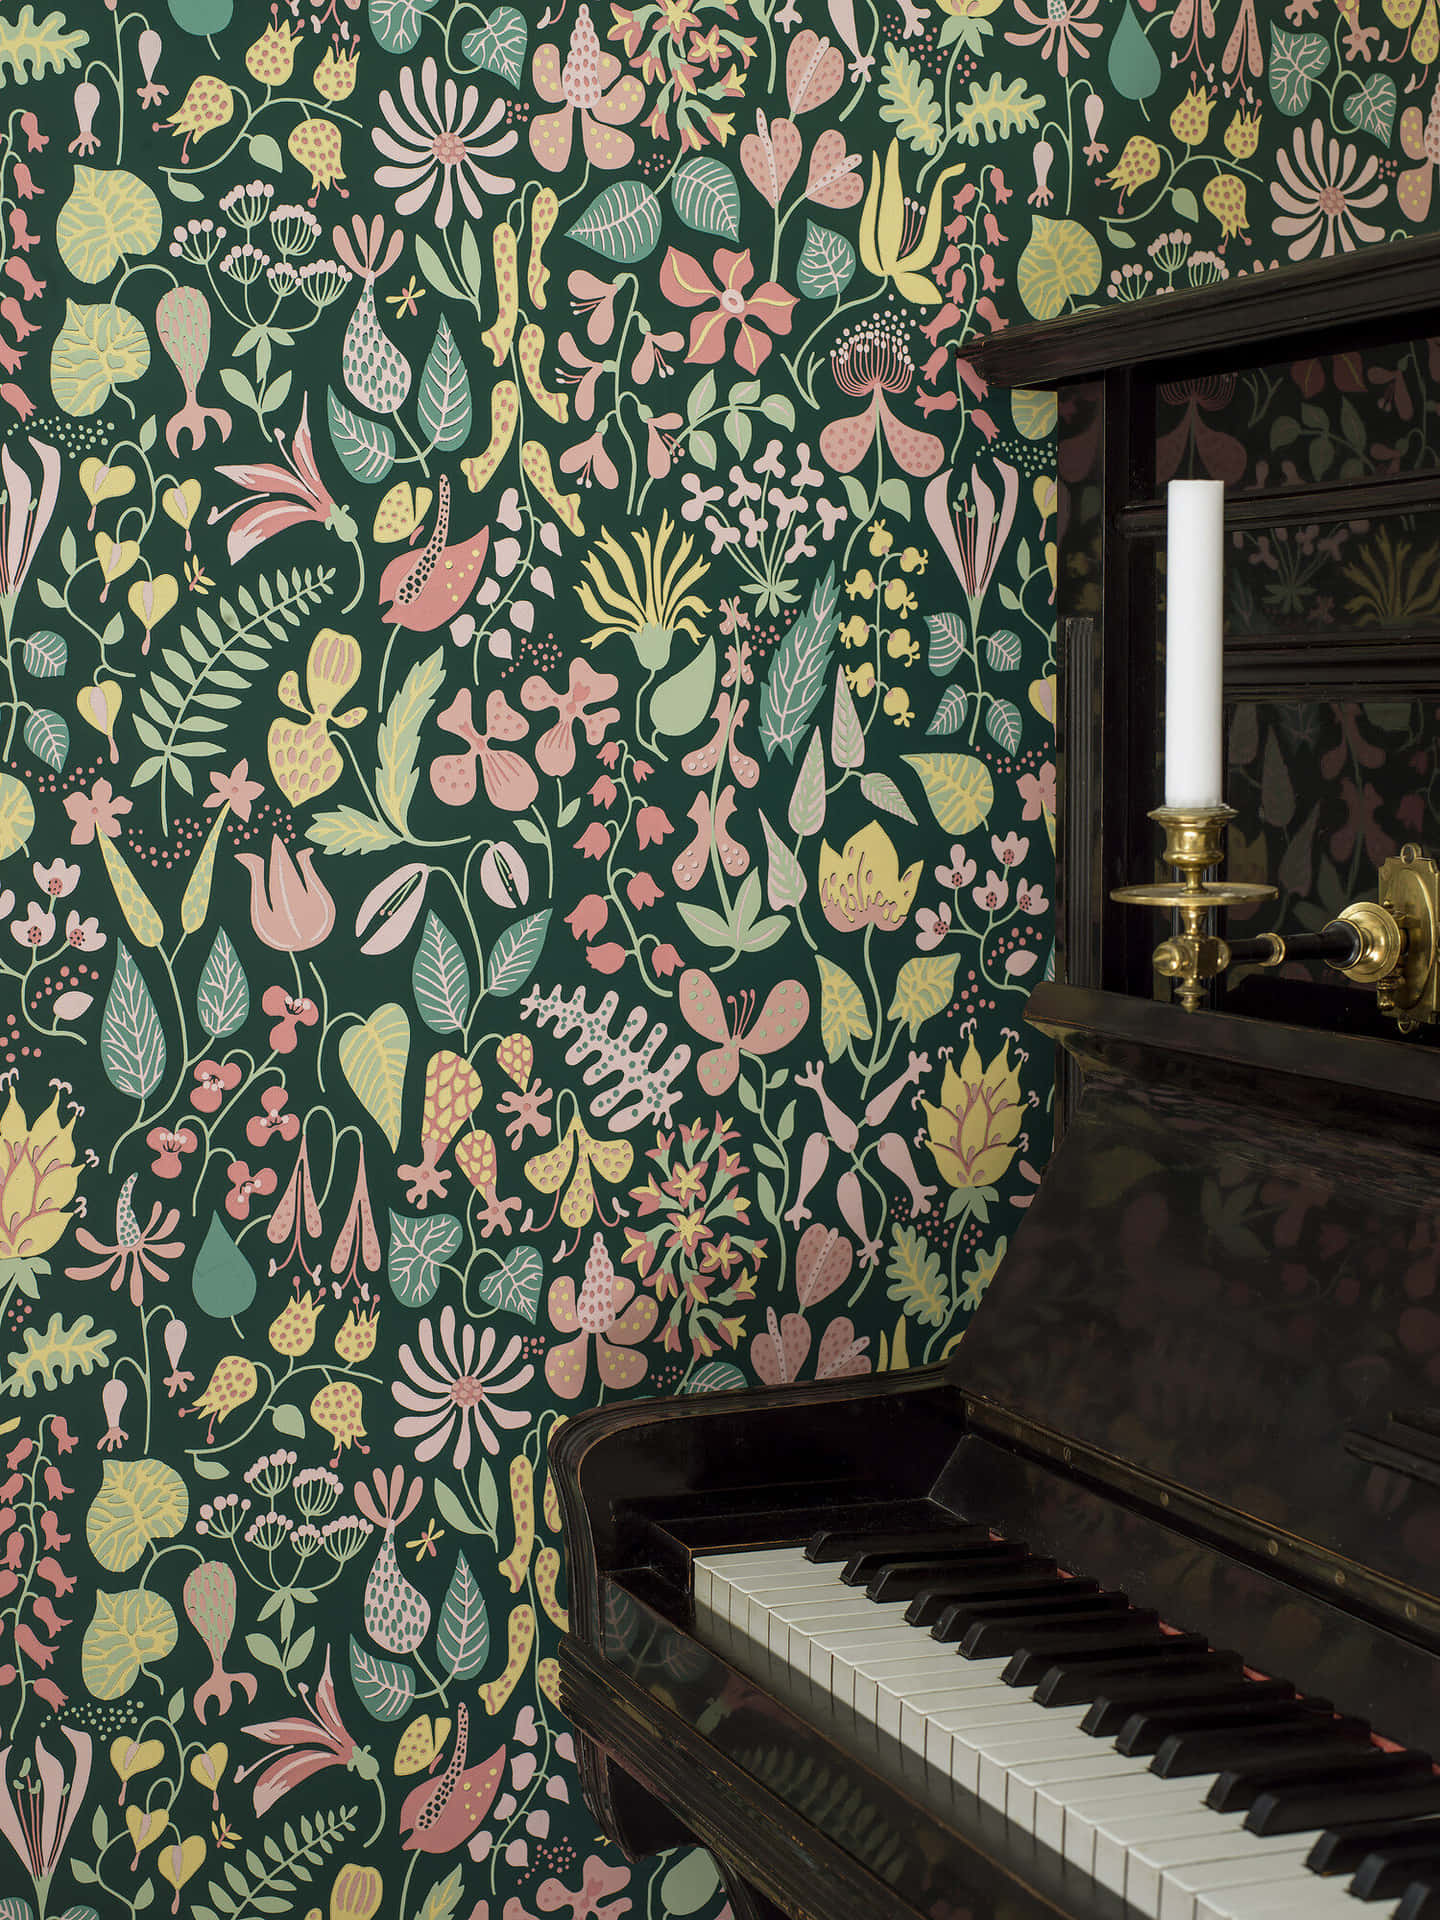 Intricate Vintage Piano [wallpaper] Wallpaper